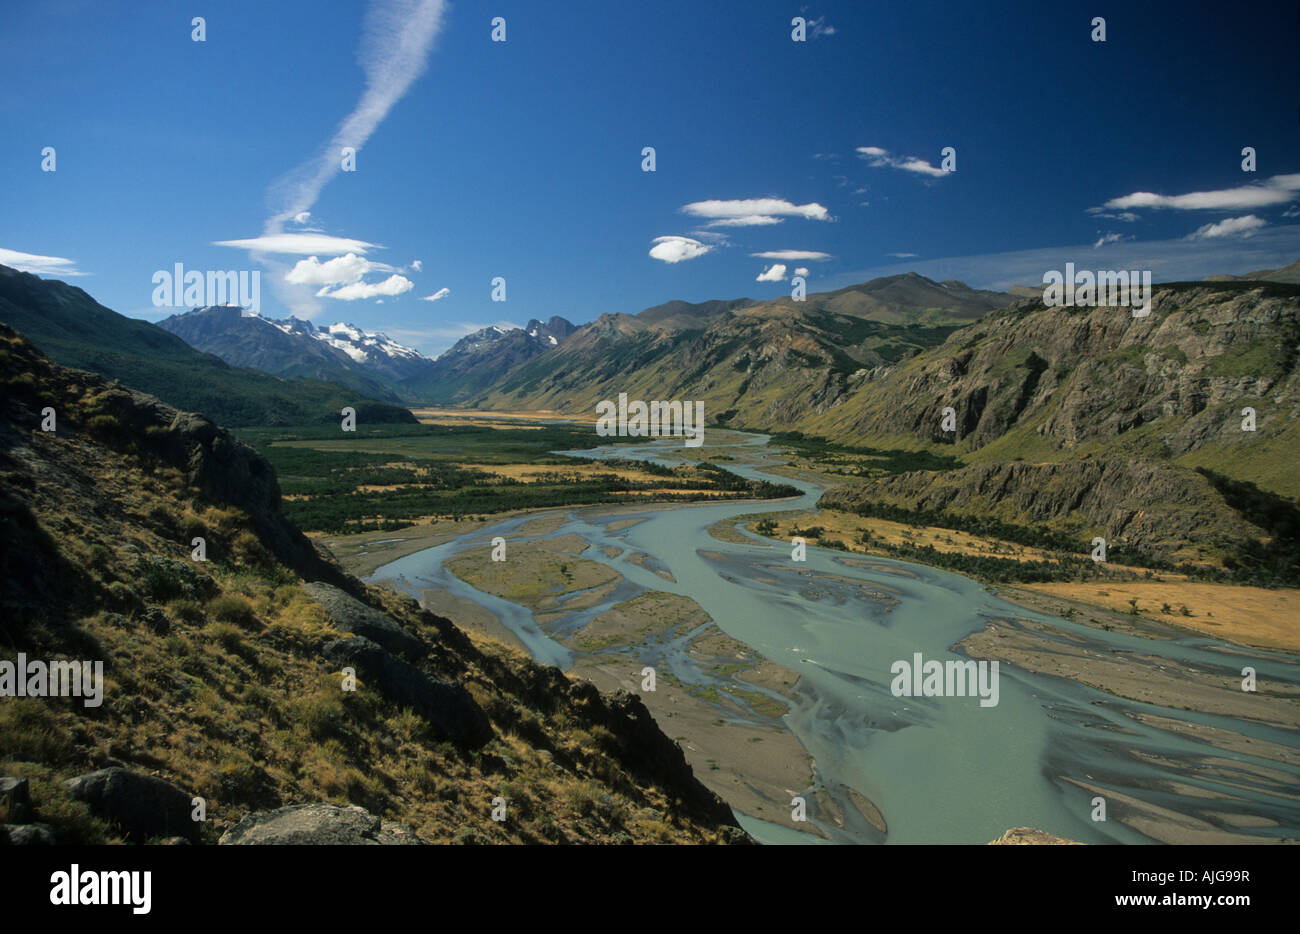 View of channels of braided river and alluvial deposits, Rio de las Vueltas valley, El Chalten, Los Glaciares National Park, Patagonia,  Arg Stock Photo